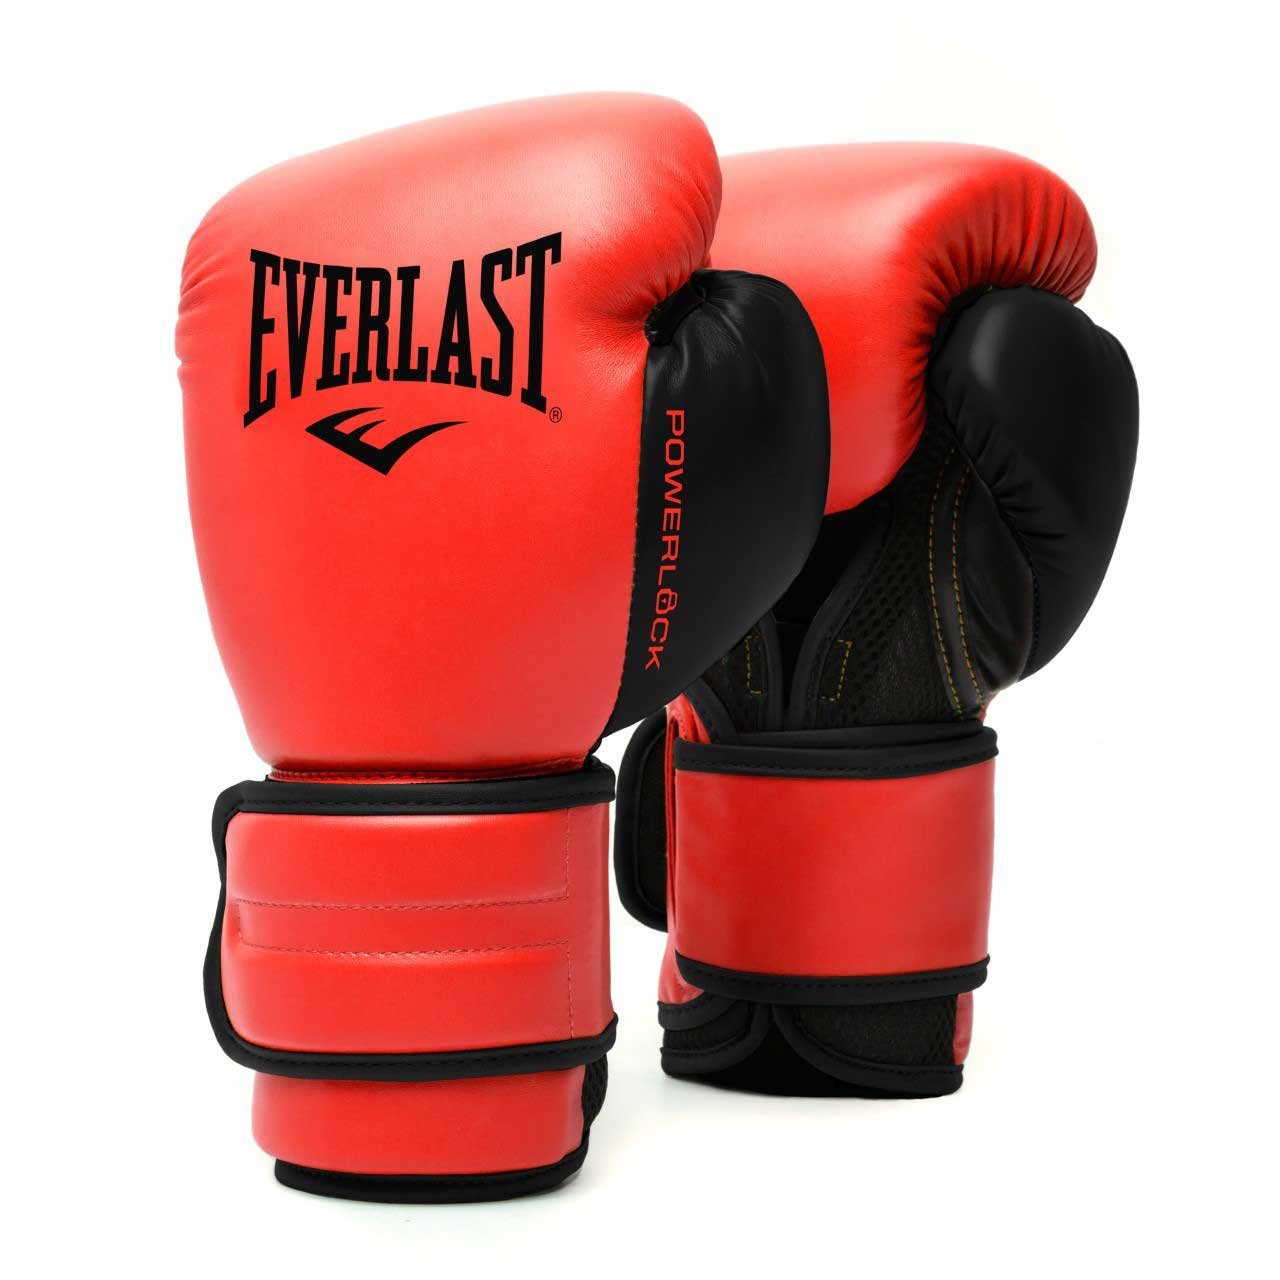 Everlast Boxhandschuhe POWERLOCK 2R, maximale Temperaturkontrolle bei intensiven Trainingseinheiten Rot